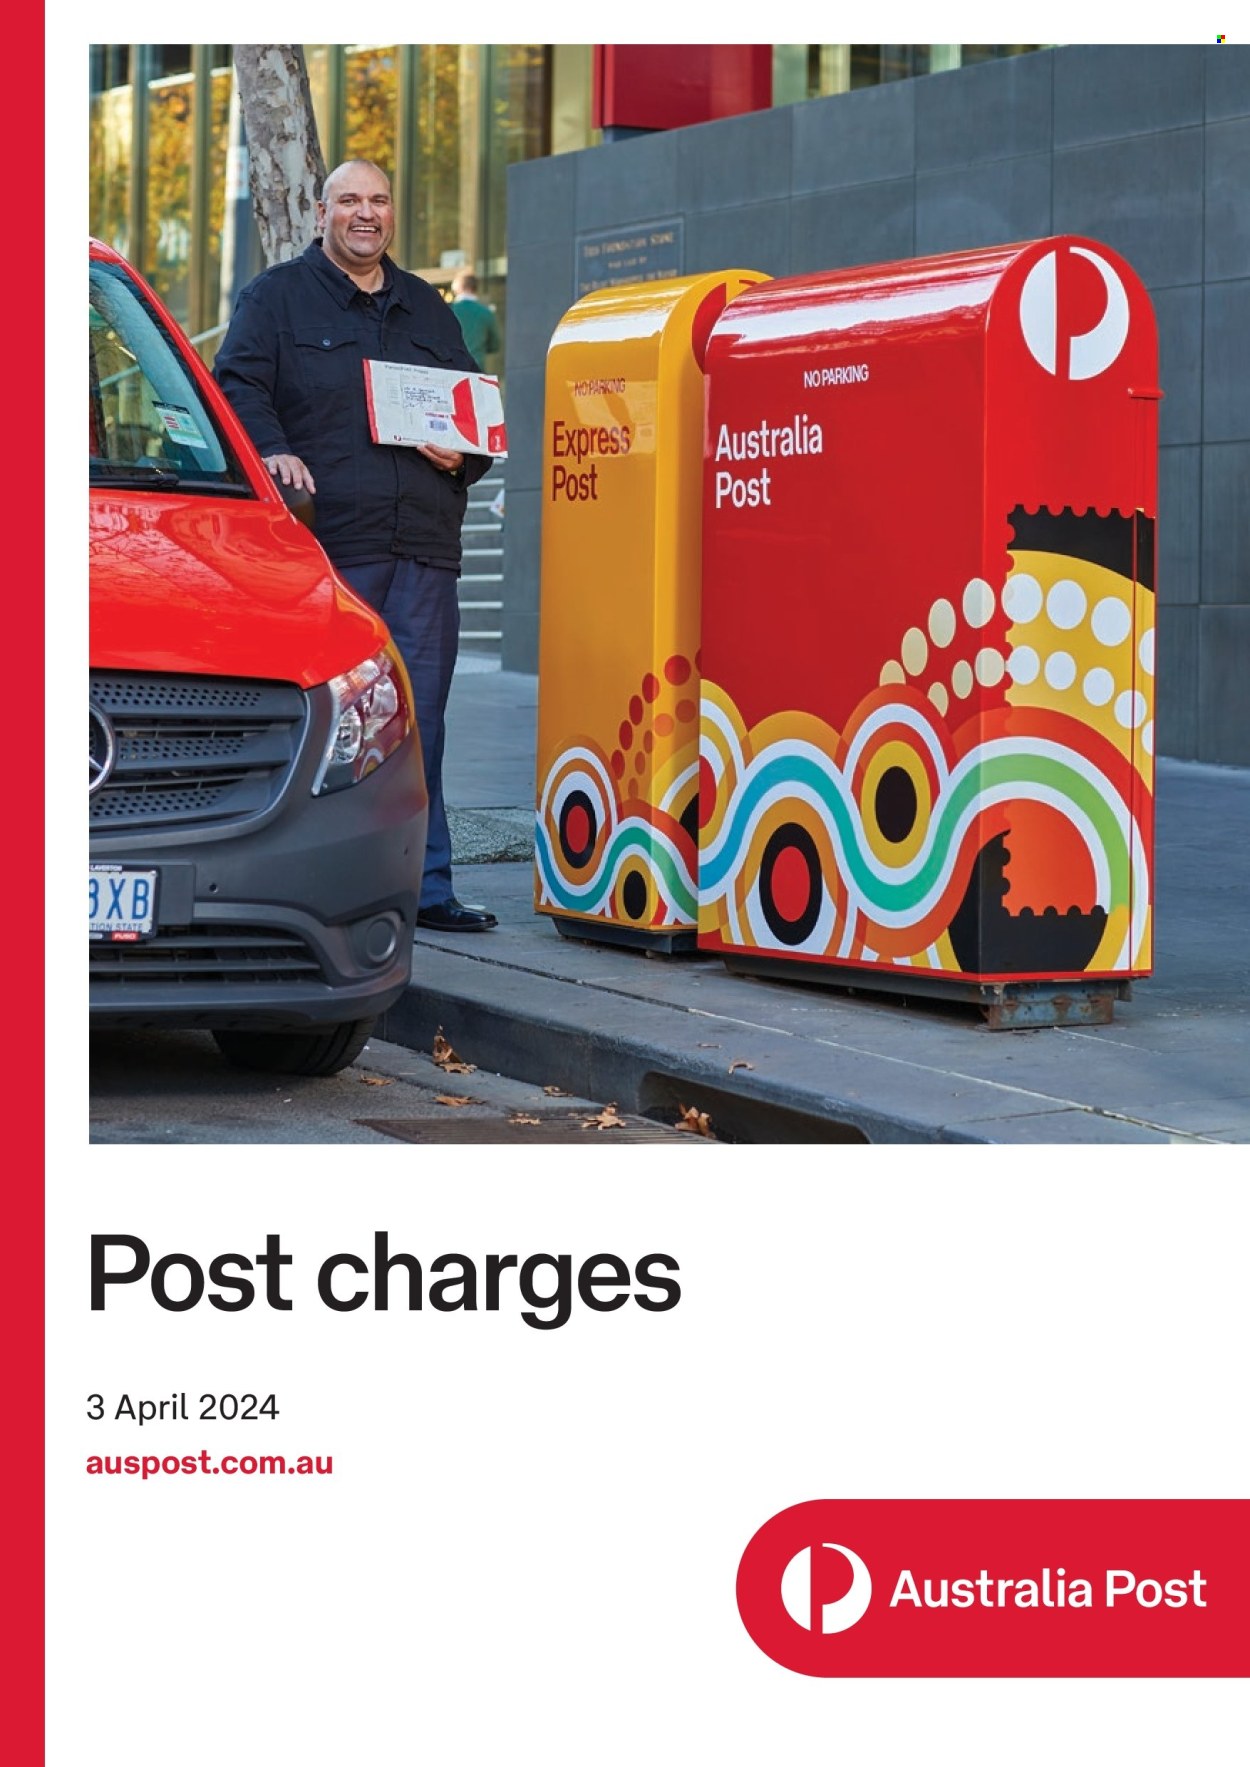 Australia Post catalogue.